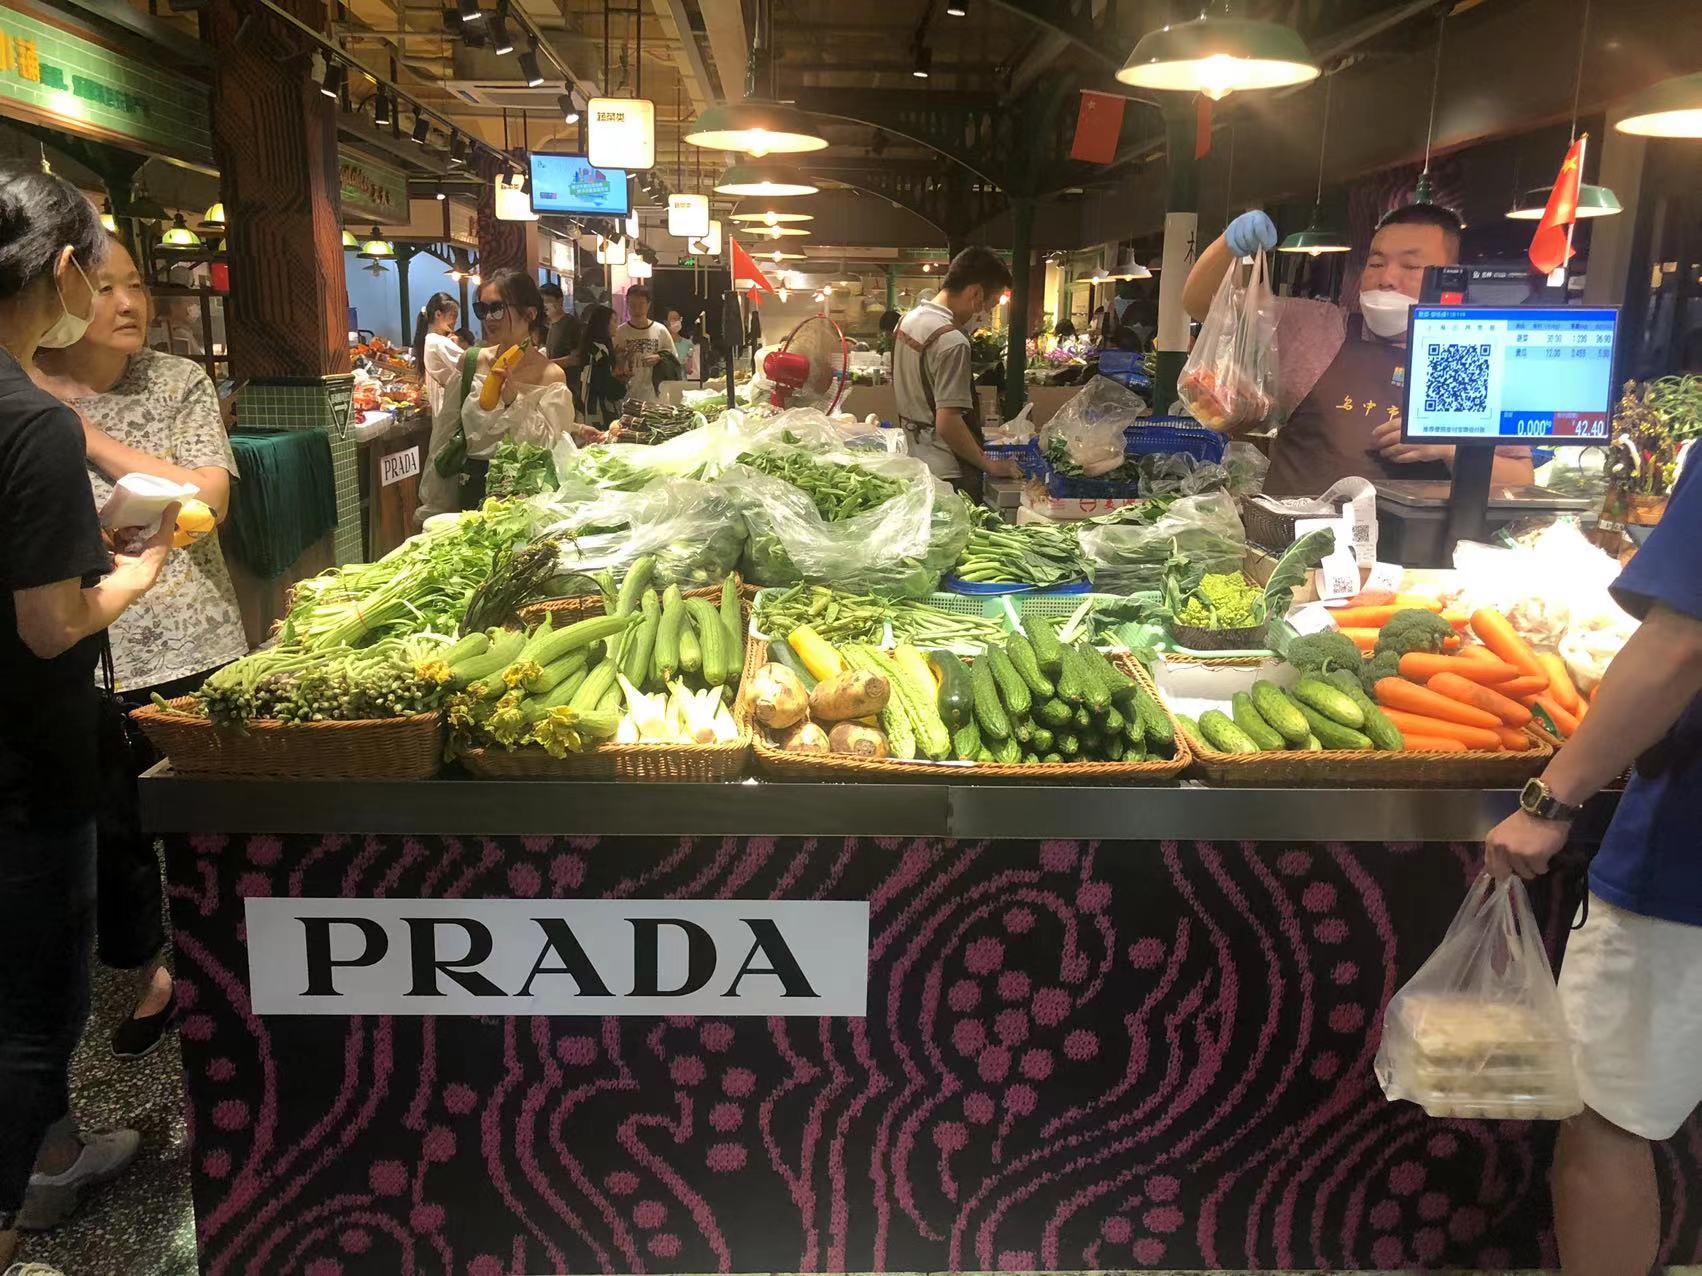 Prada opens pop-up store in Beijing, China - Retail in Asia